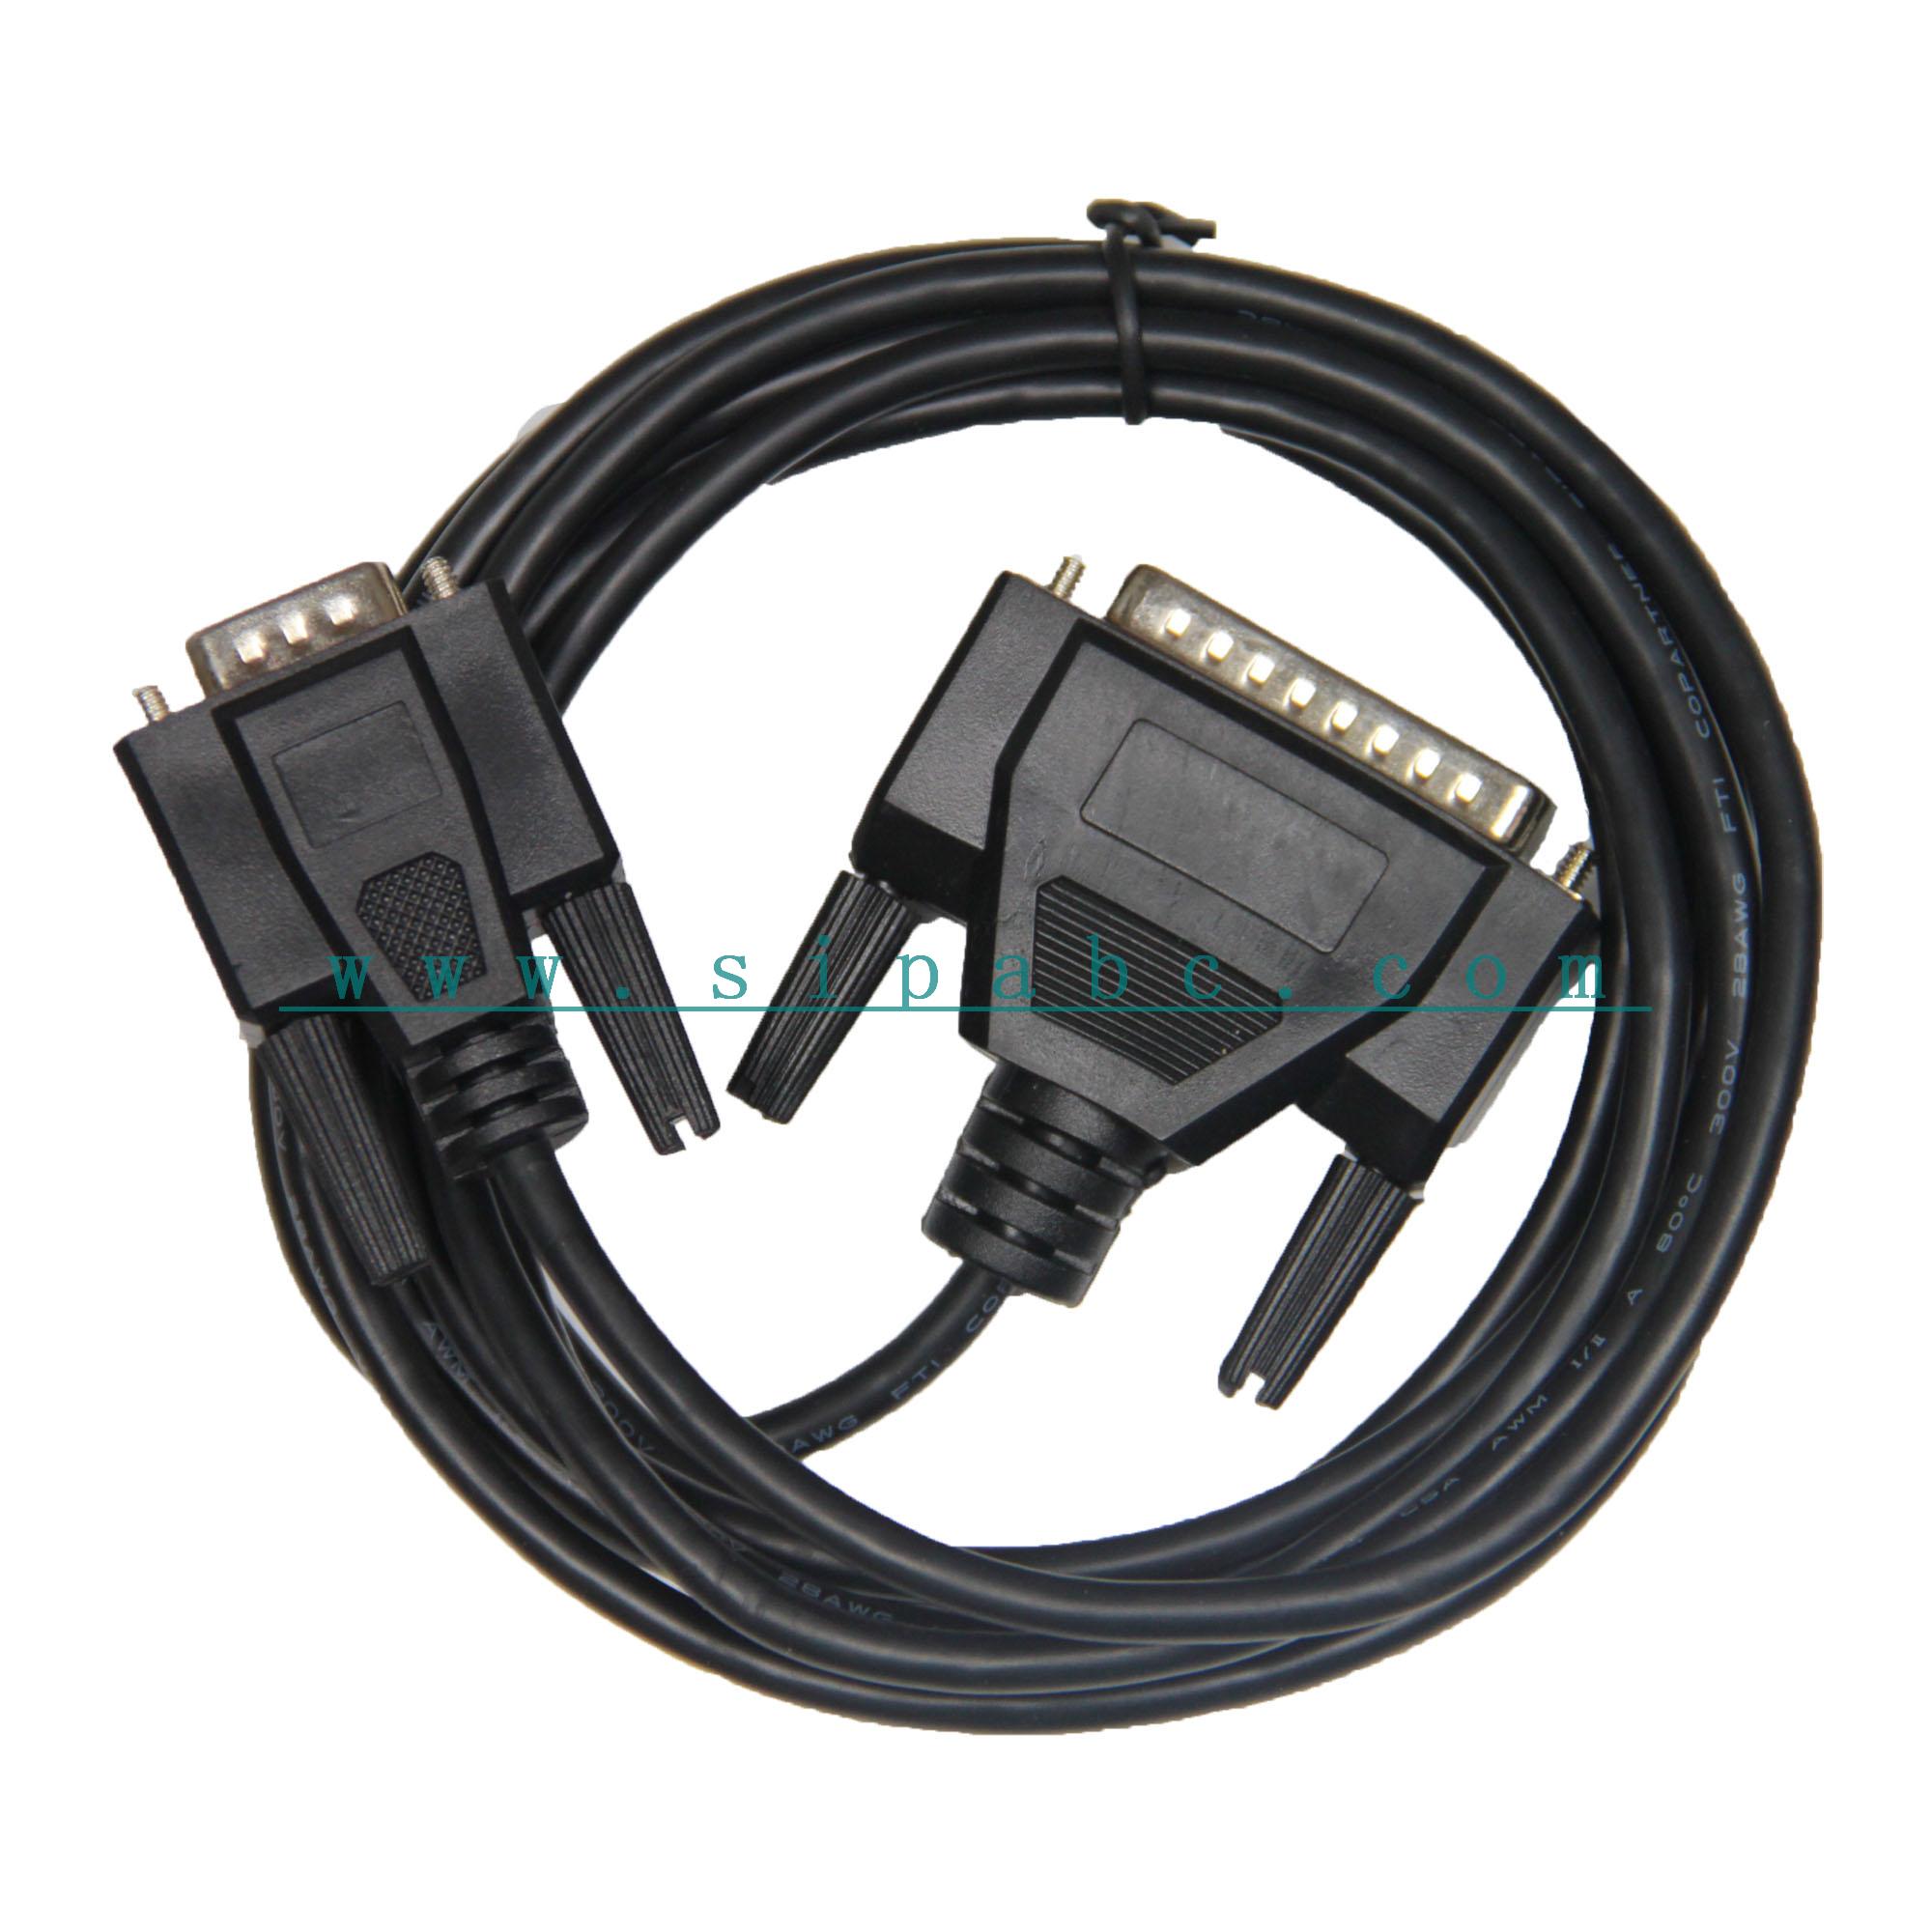 USB-FANUC FTDI Chip USB-DB25M or RS232 Programming Cable 25-Pin for FANUC CNC DNC: DB9F-DB25M 5M